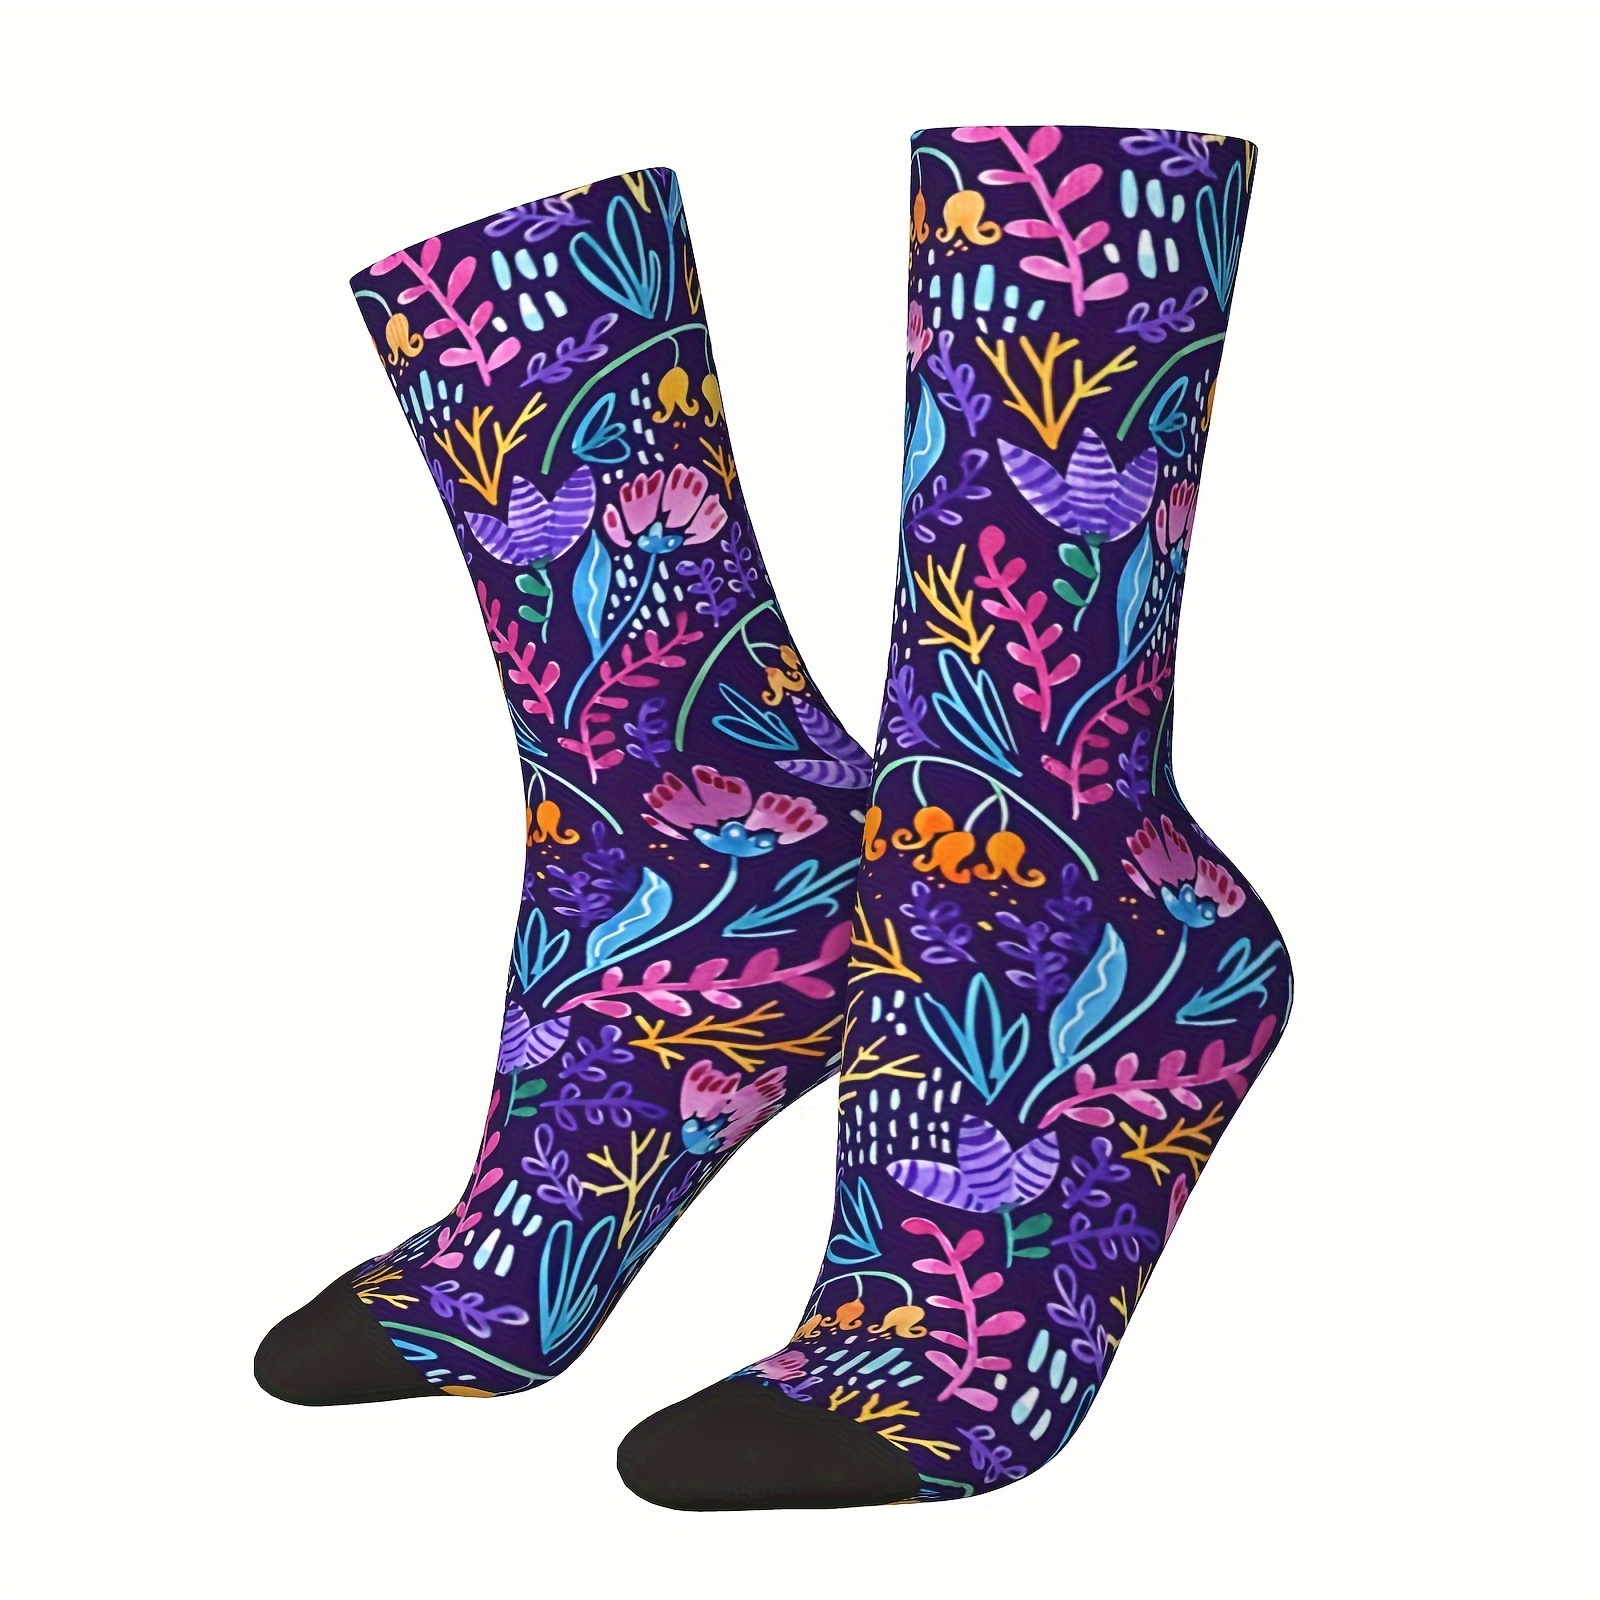 

1 Pair Of Men's Harajuku Vintage Style Novel Wonderland Floral Pattern Crew Socks, Comfy & Breathable Trendy Graffiti Unisex Socks For Gifts, Outdoor Wearing All Seasons Wearing